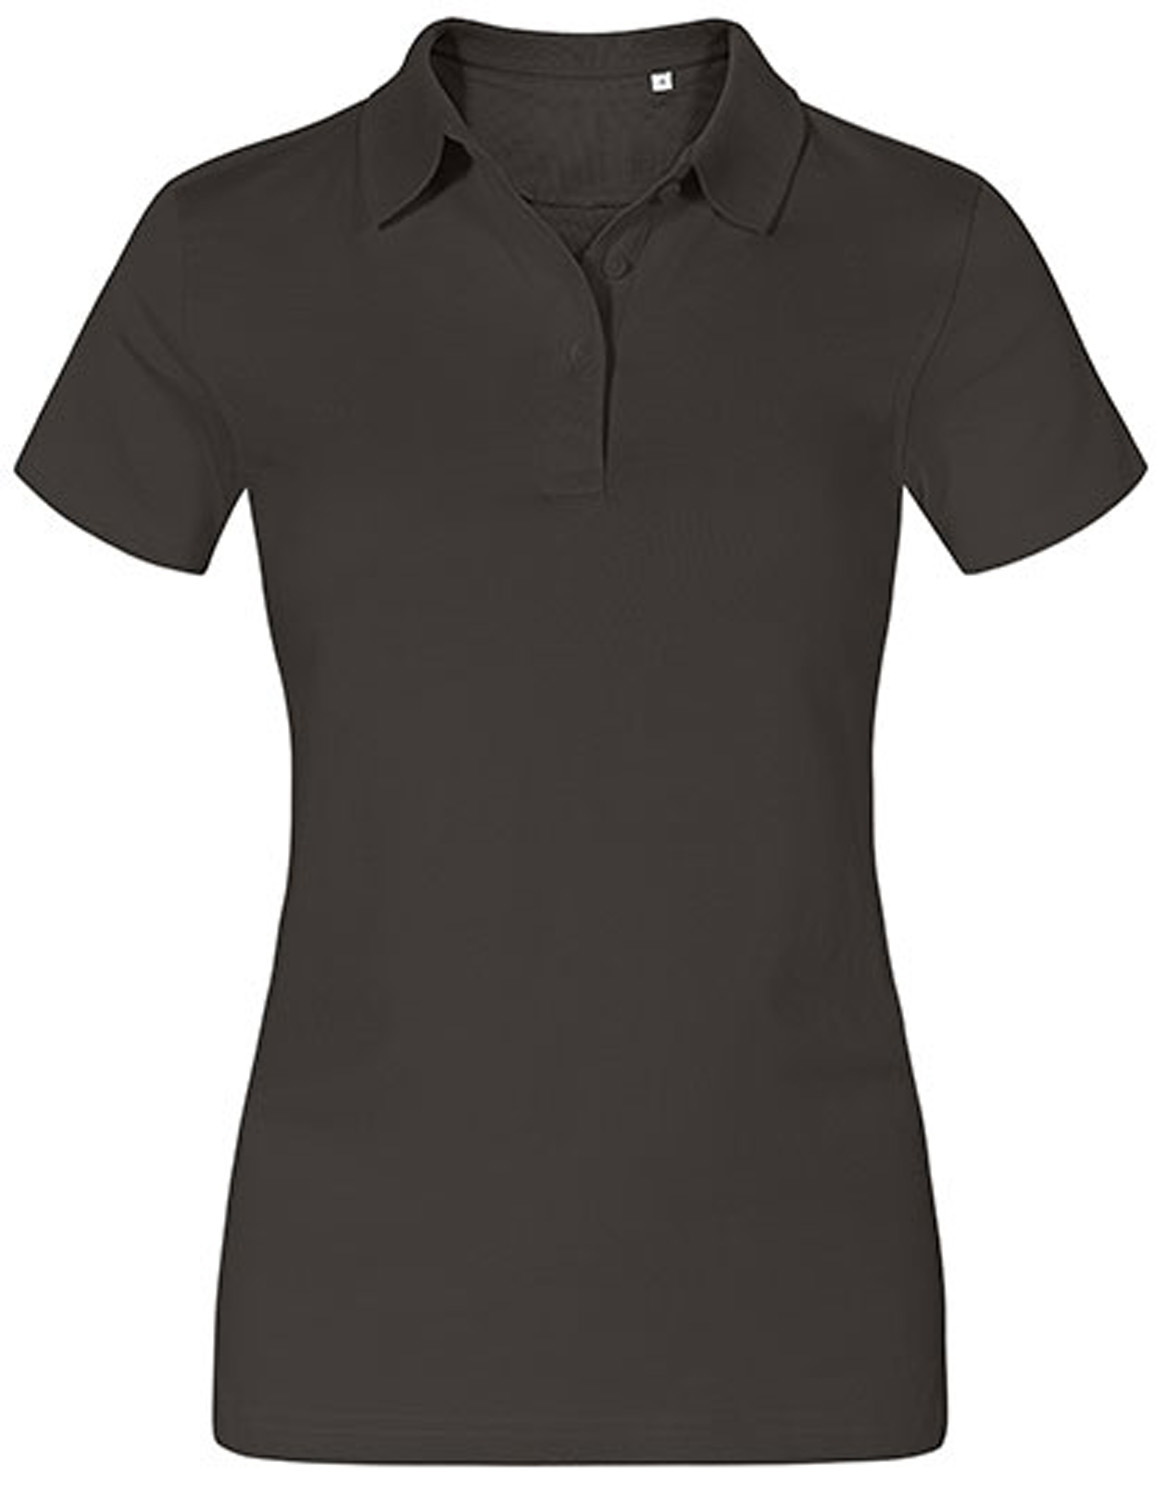 Damen Poloshirt kurzarm Promodoro Jersey 4025 Charcoal (Solid)